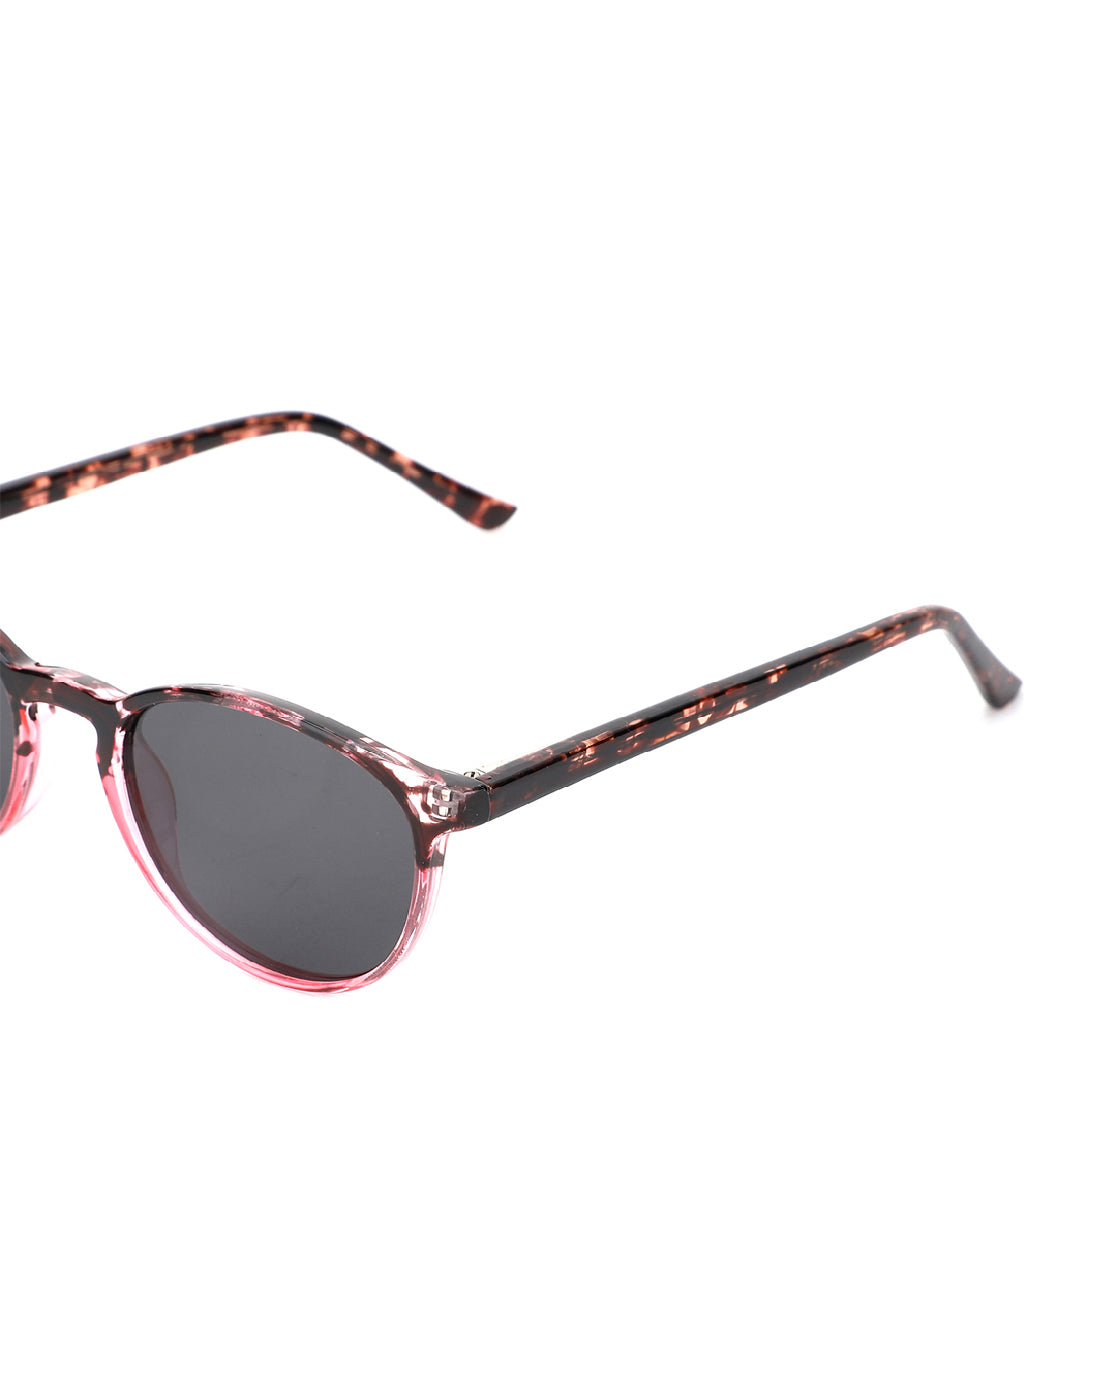 Carlton London Polarised Oval Sunglasses For Women